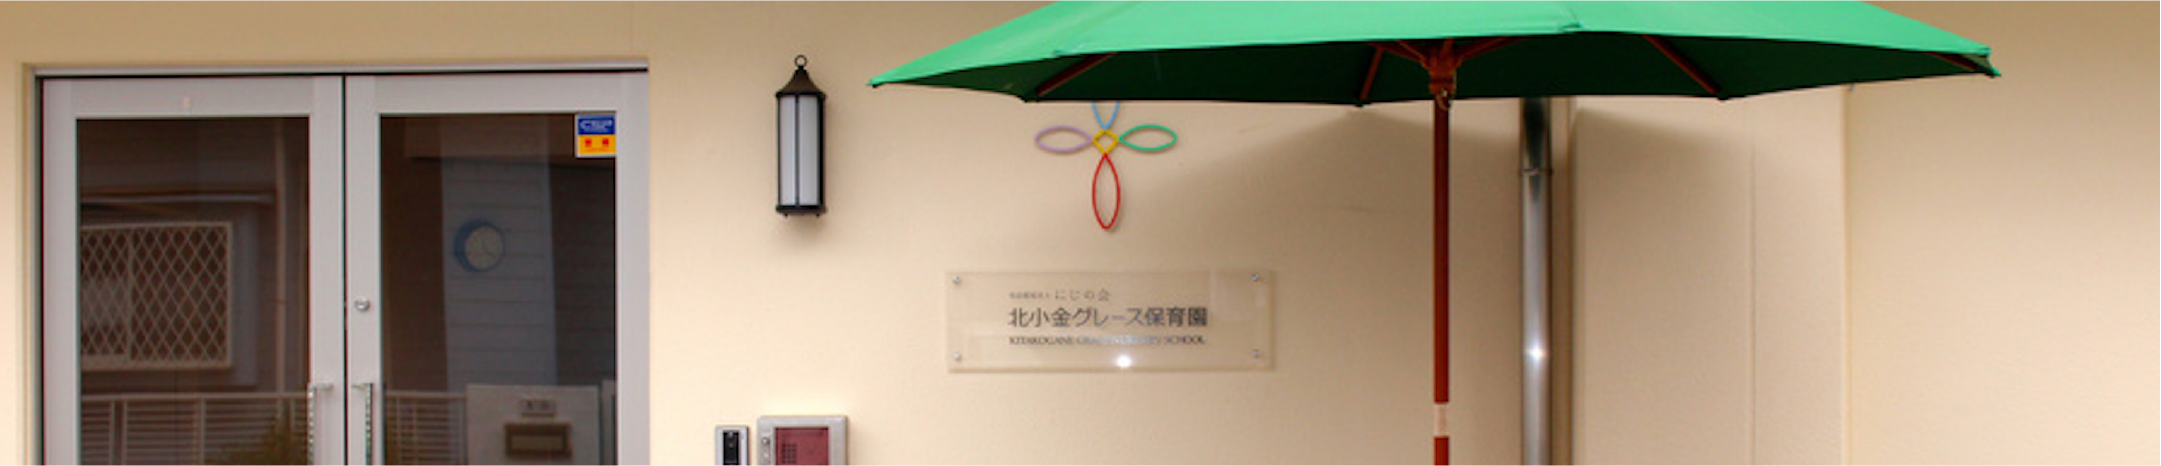 Koganejyoshi Grace Nursery School Noceroom